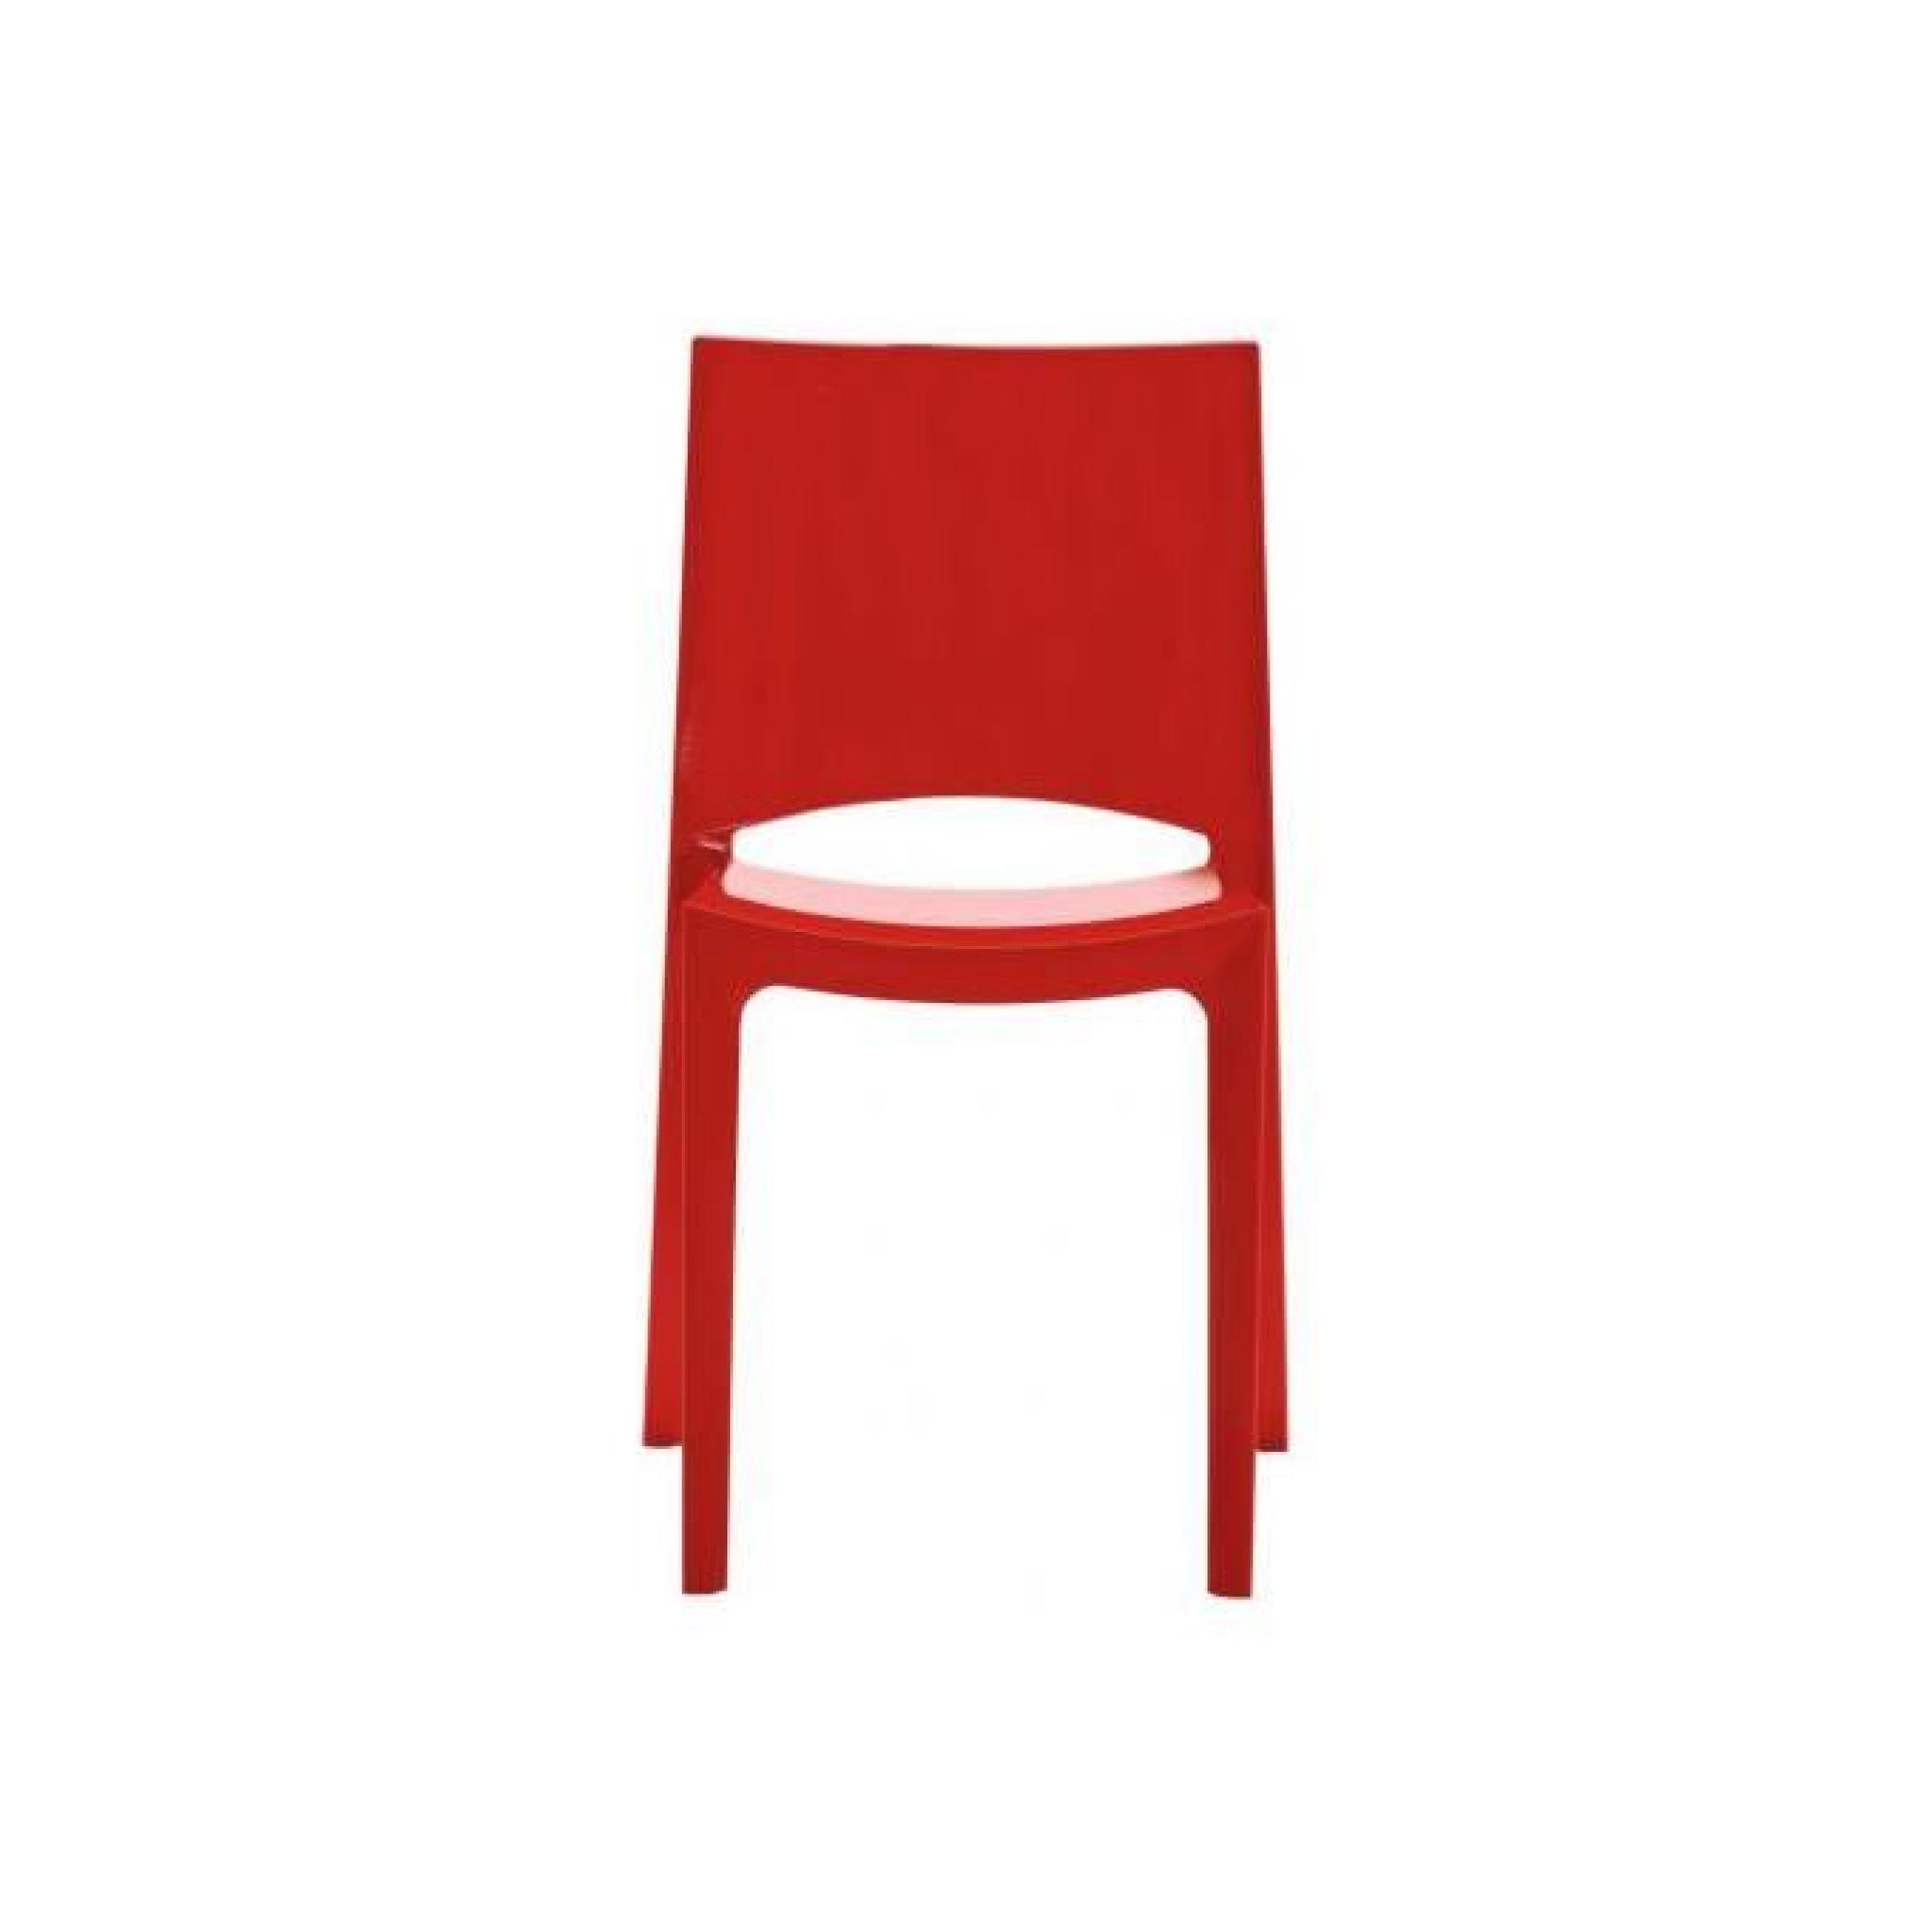 Chaise contemporaine design rouge Arlequin